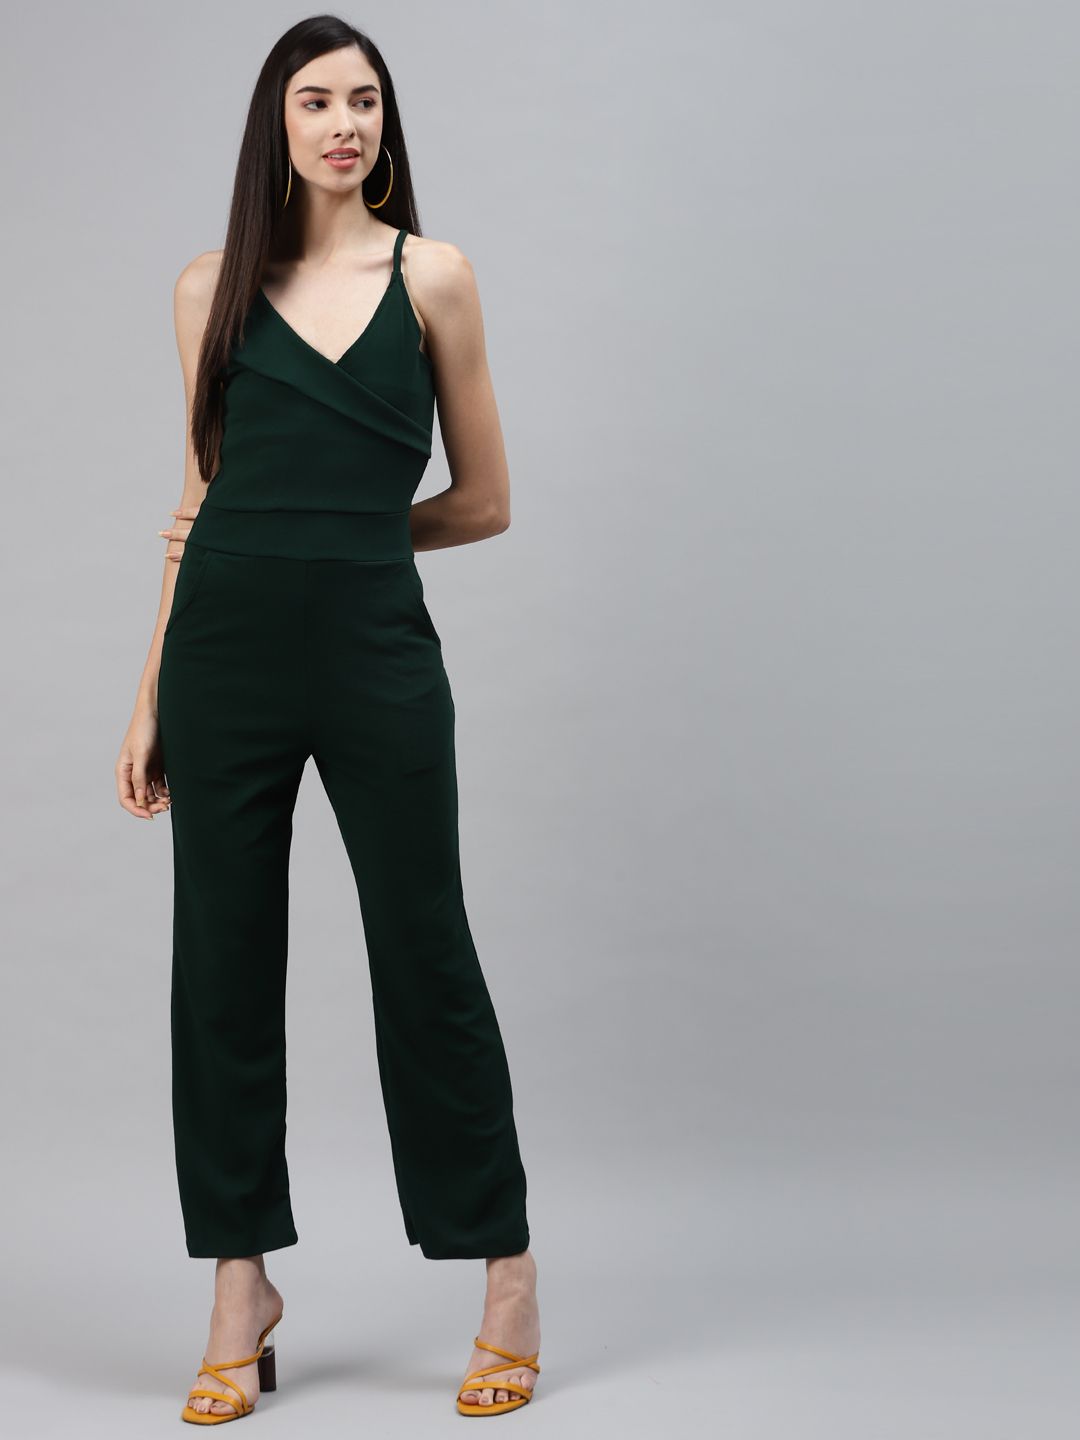 Sasimo Green Sleeveless Basic Jumpsuit Price in India